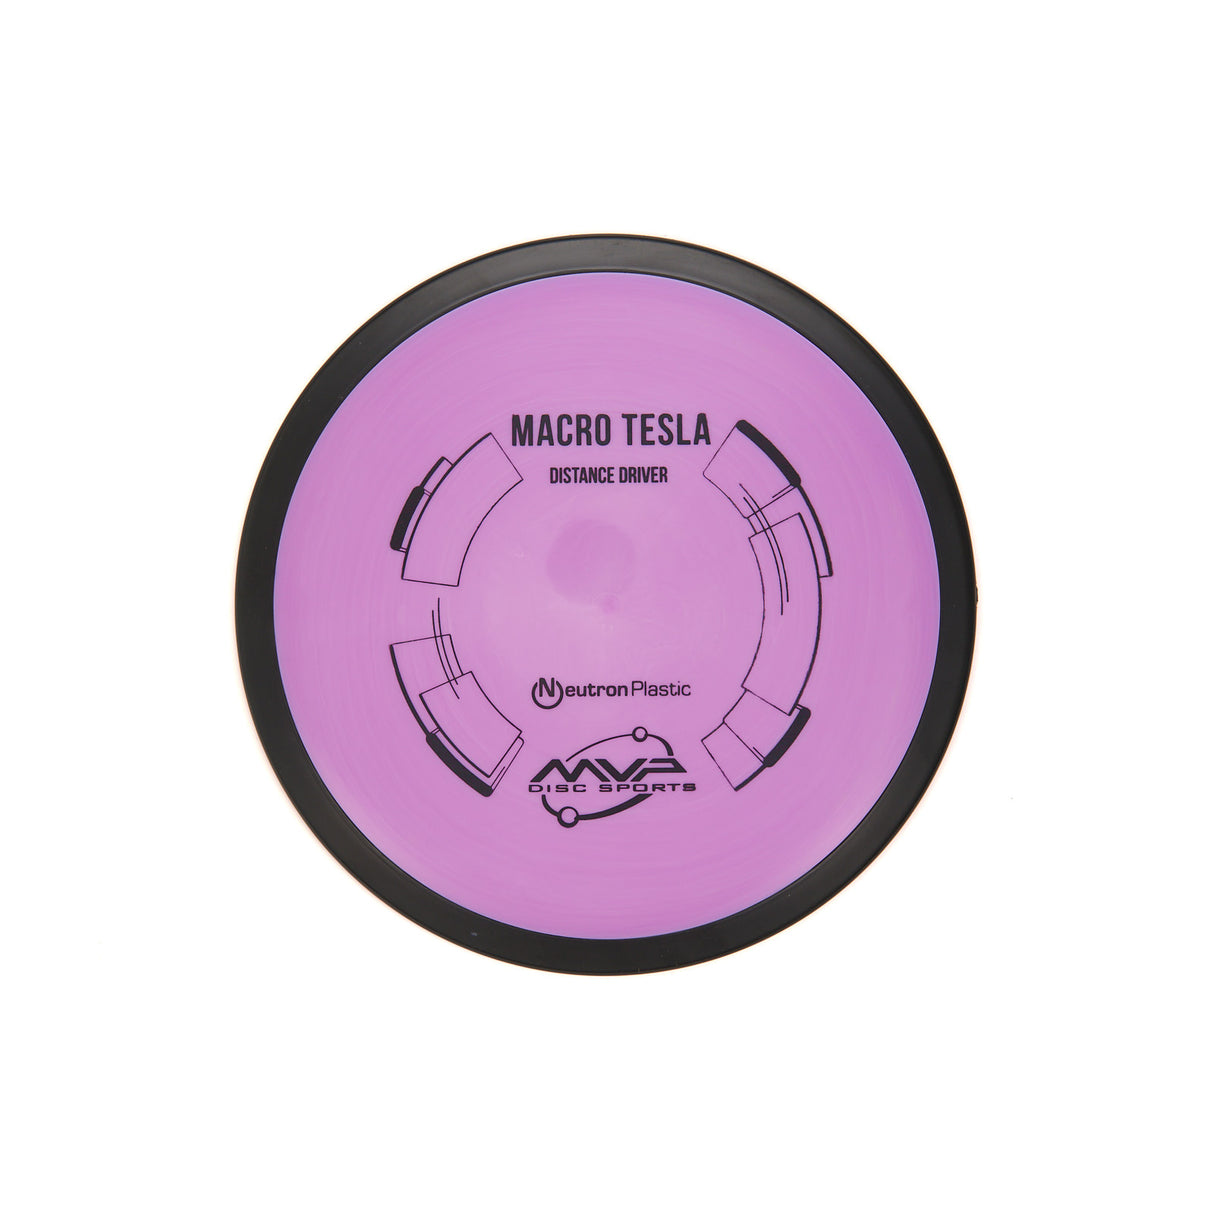 MVP Macro Tesla - Neutron 82g | Style 0013